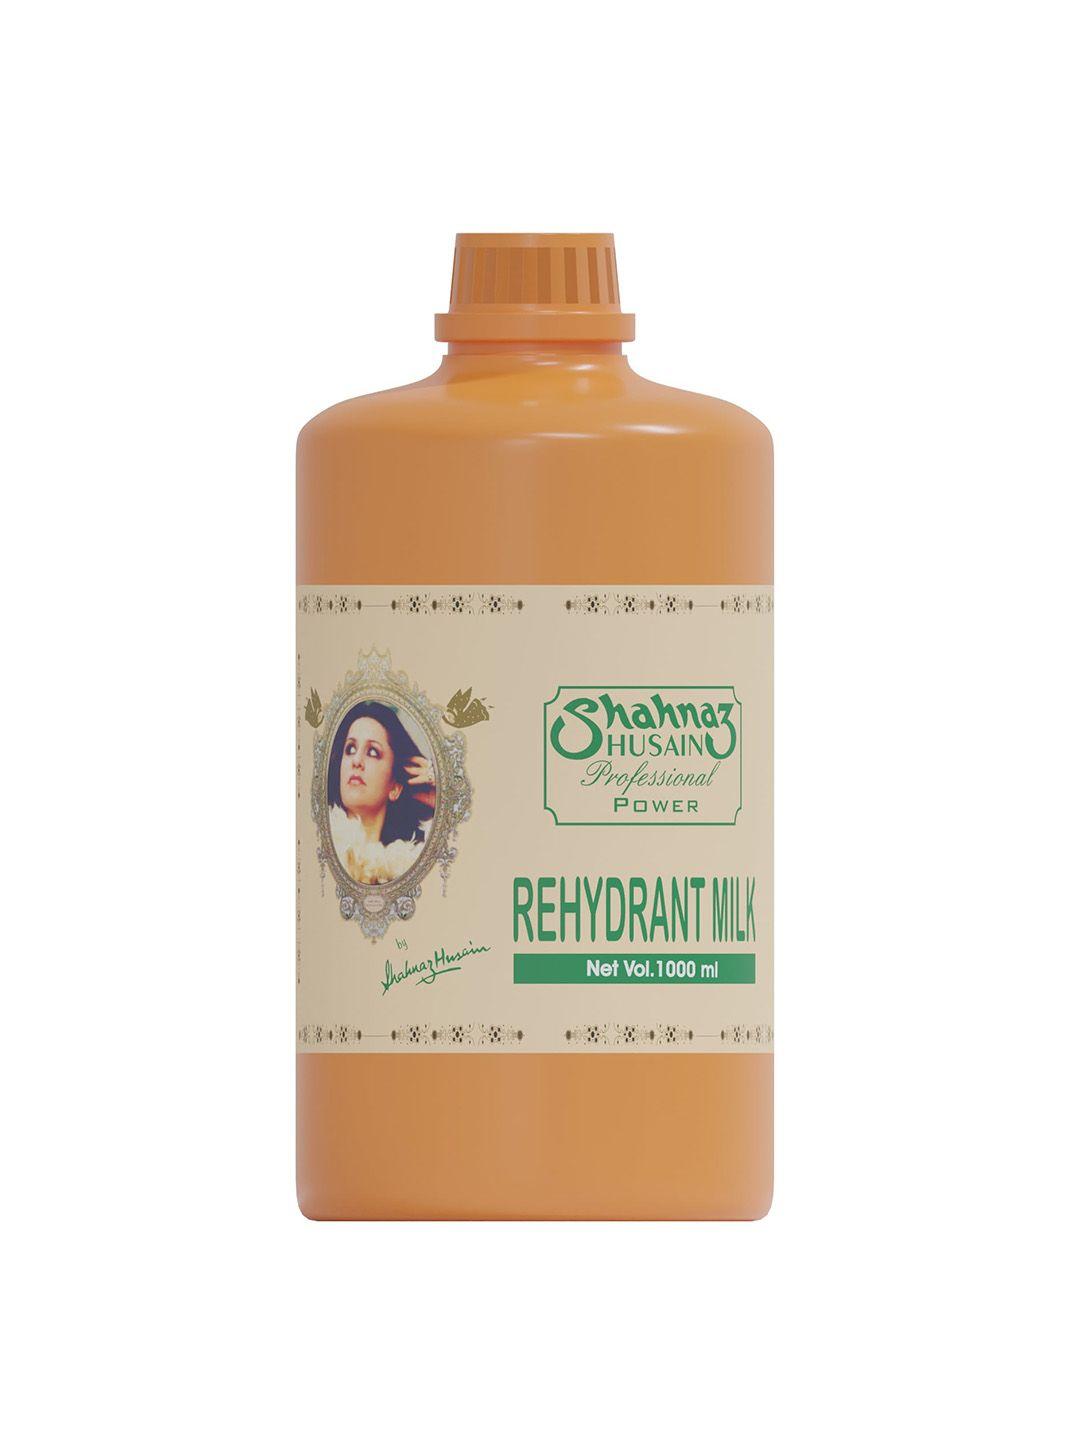 shahnaz husain professional power rehydrant milk 500 ml